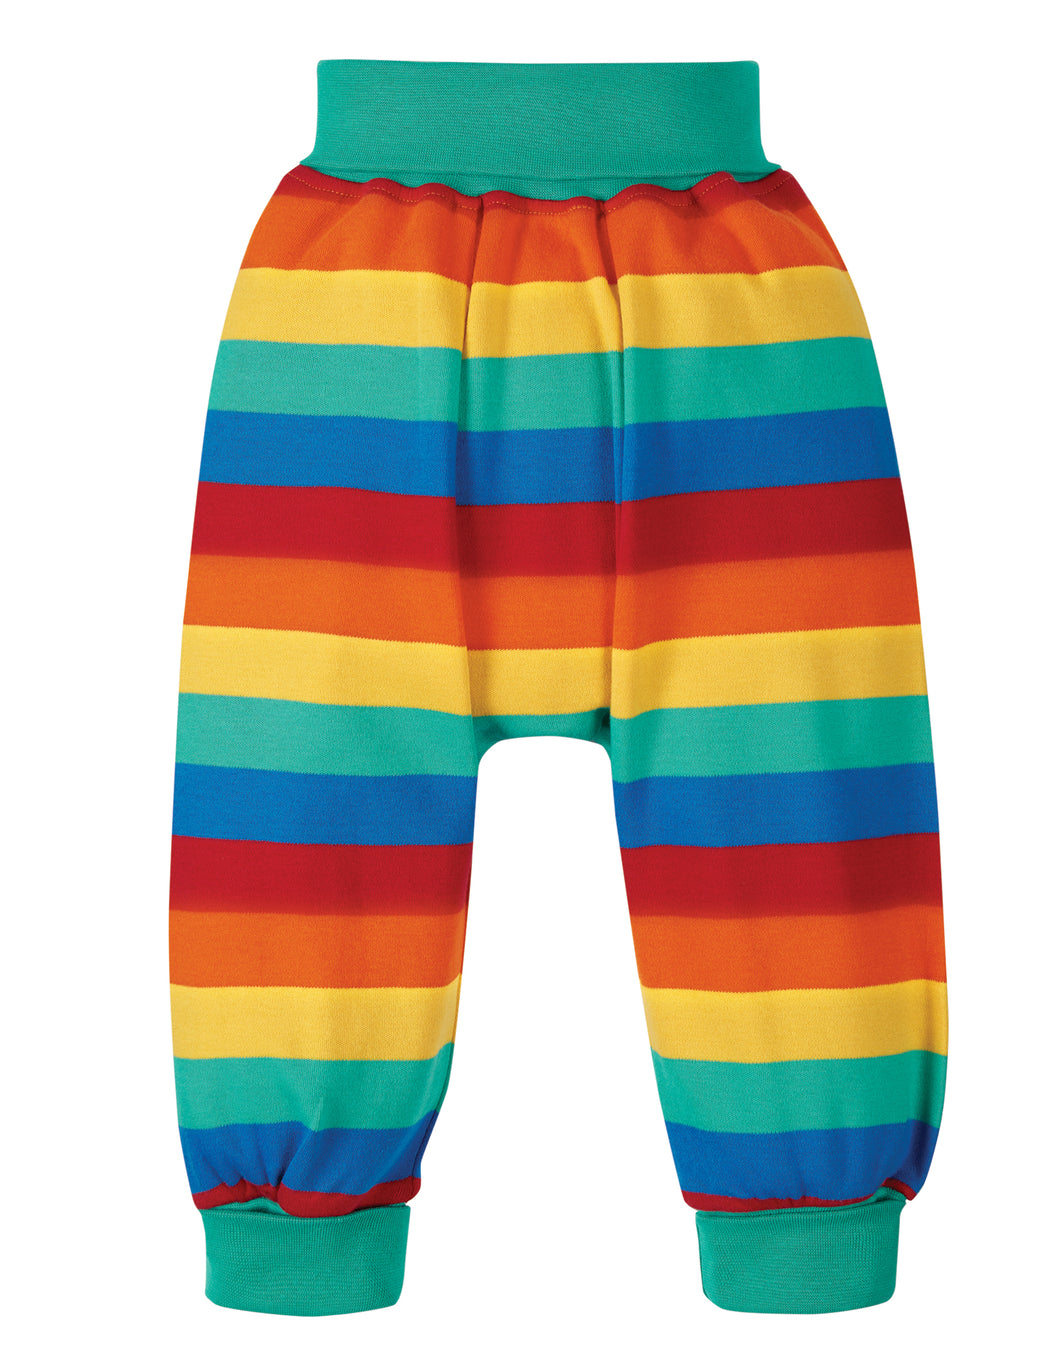 Parsnip Pants - Rainbow Stripe